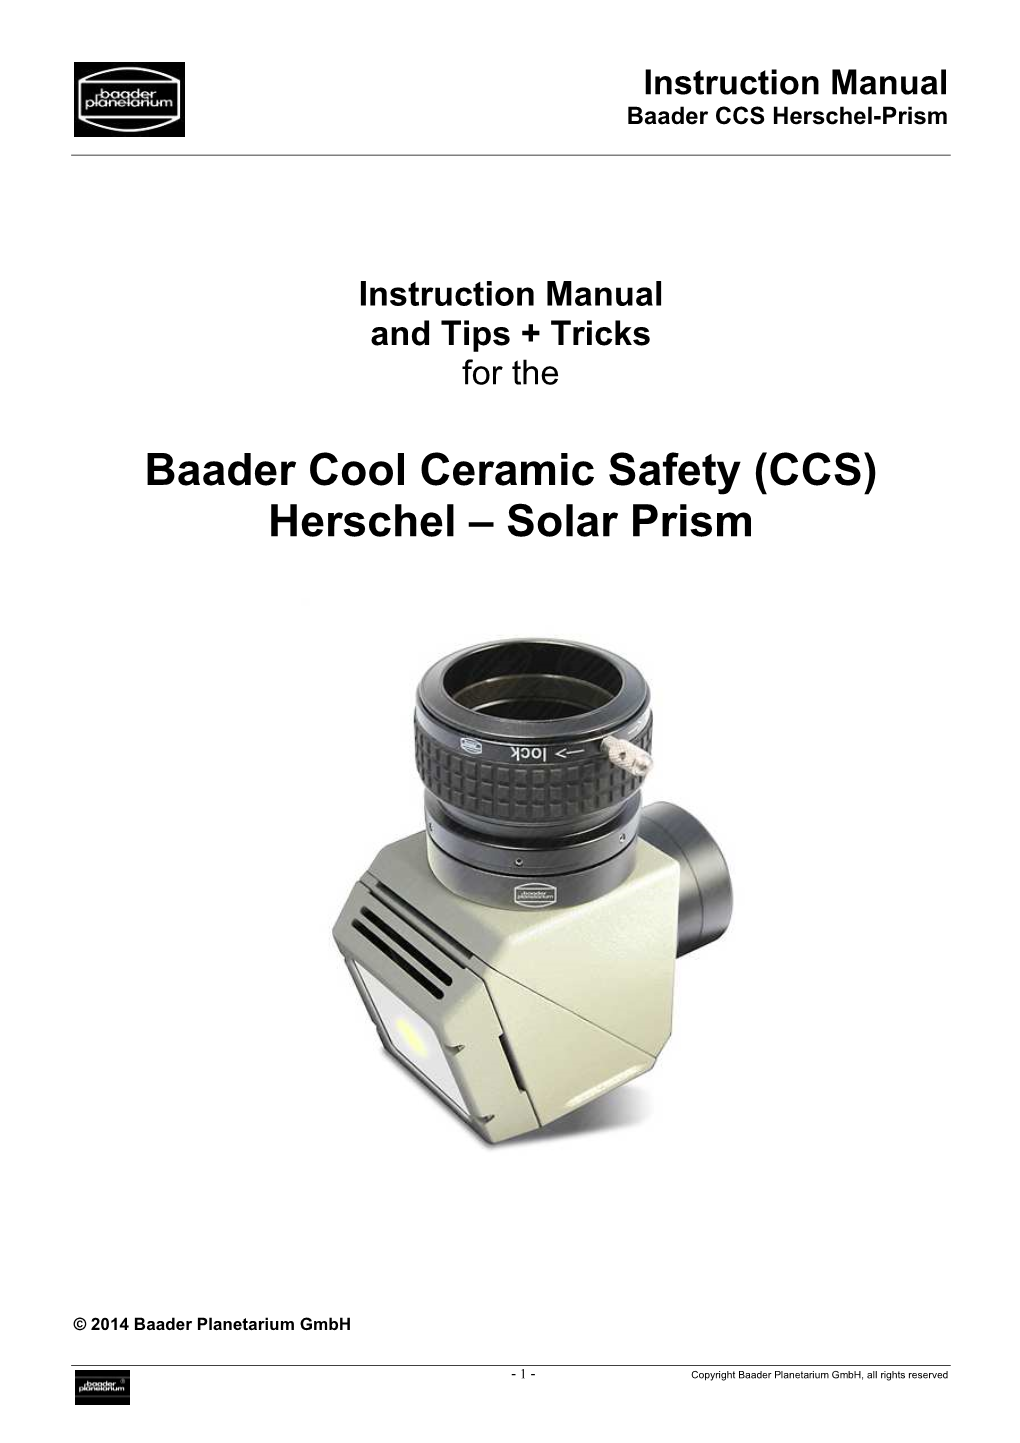 Baader Cool Ceramic Safety (CCS) Herschel – Solar Prism